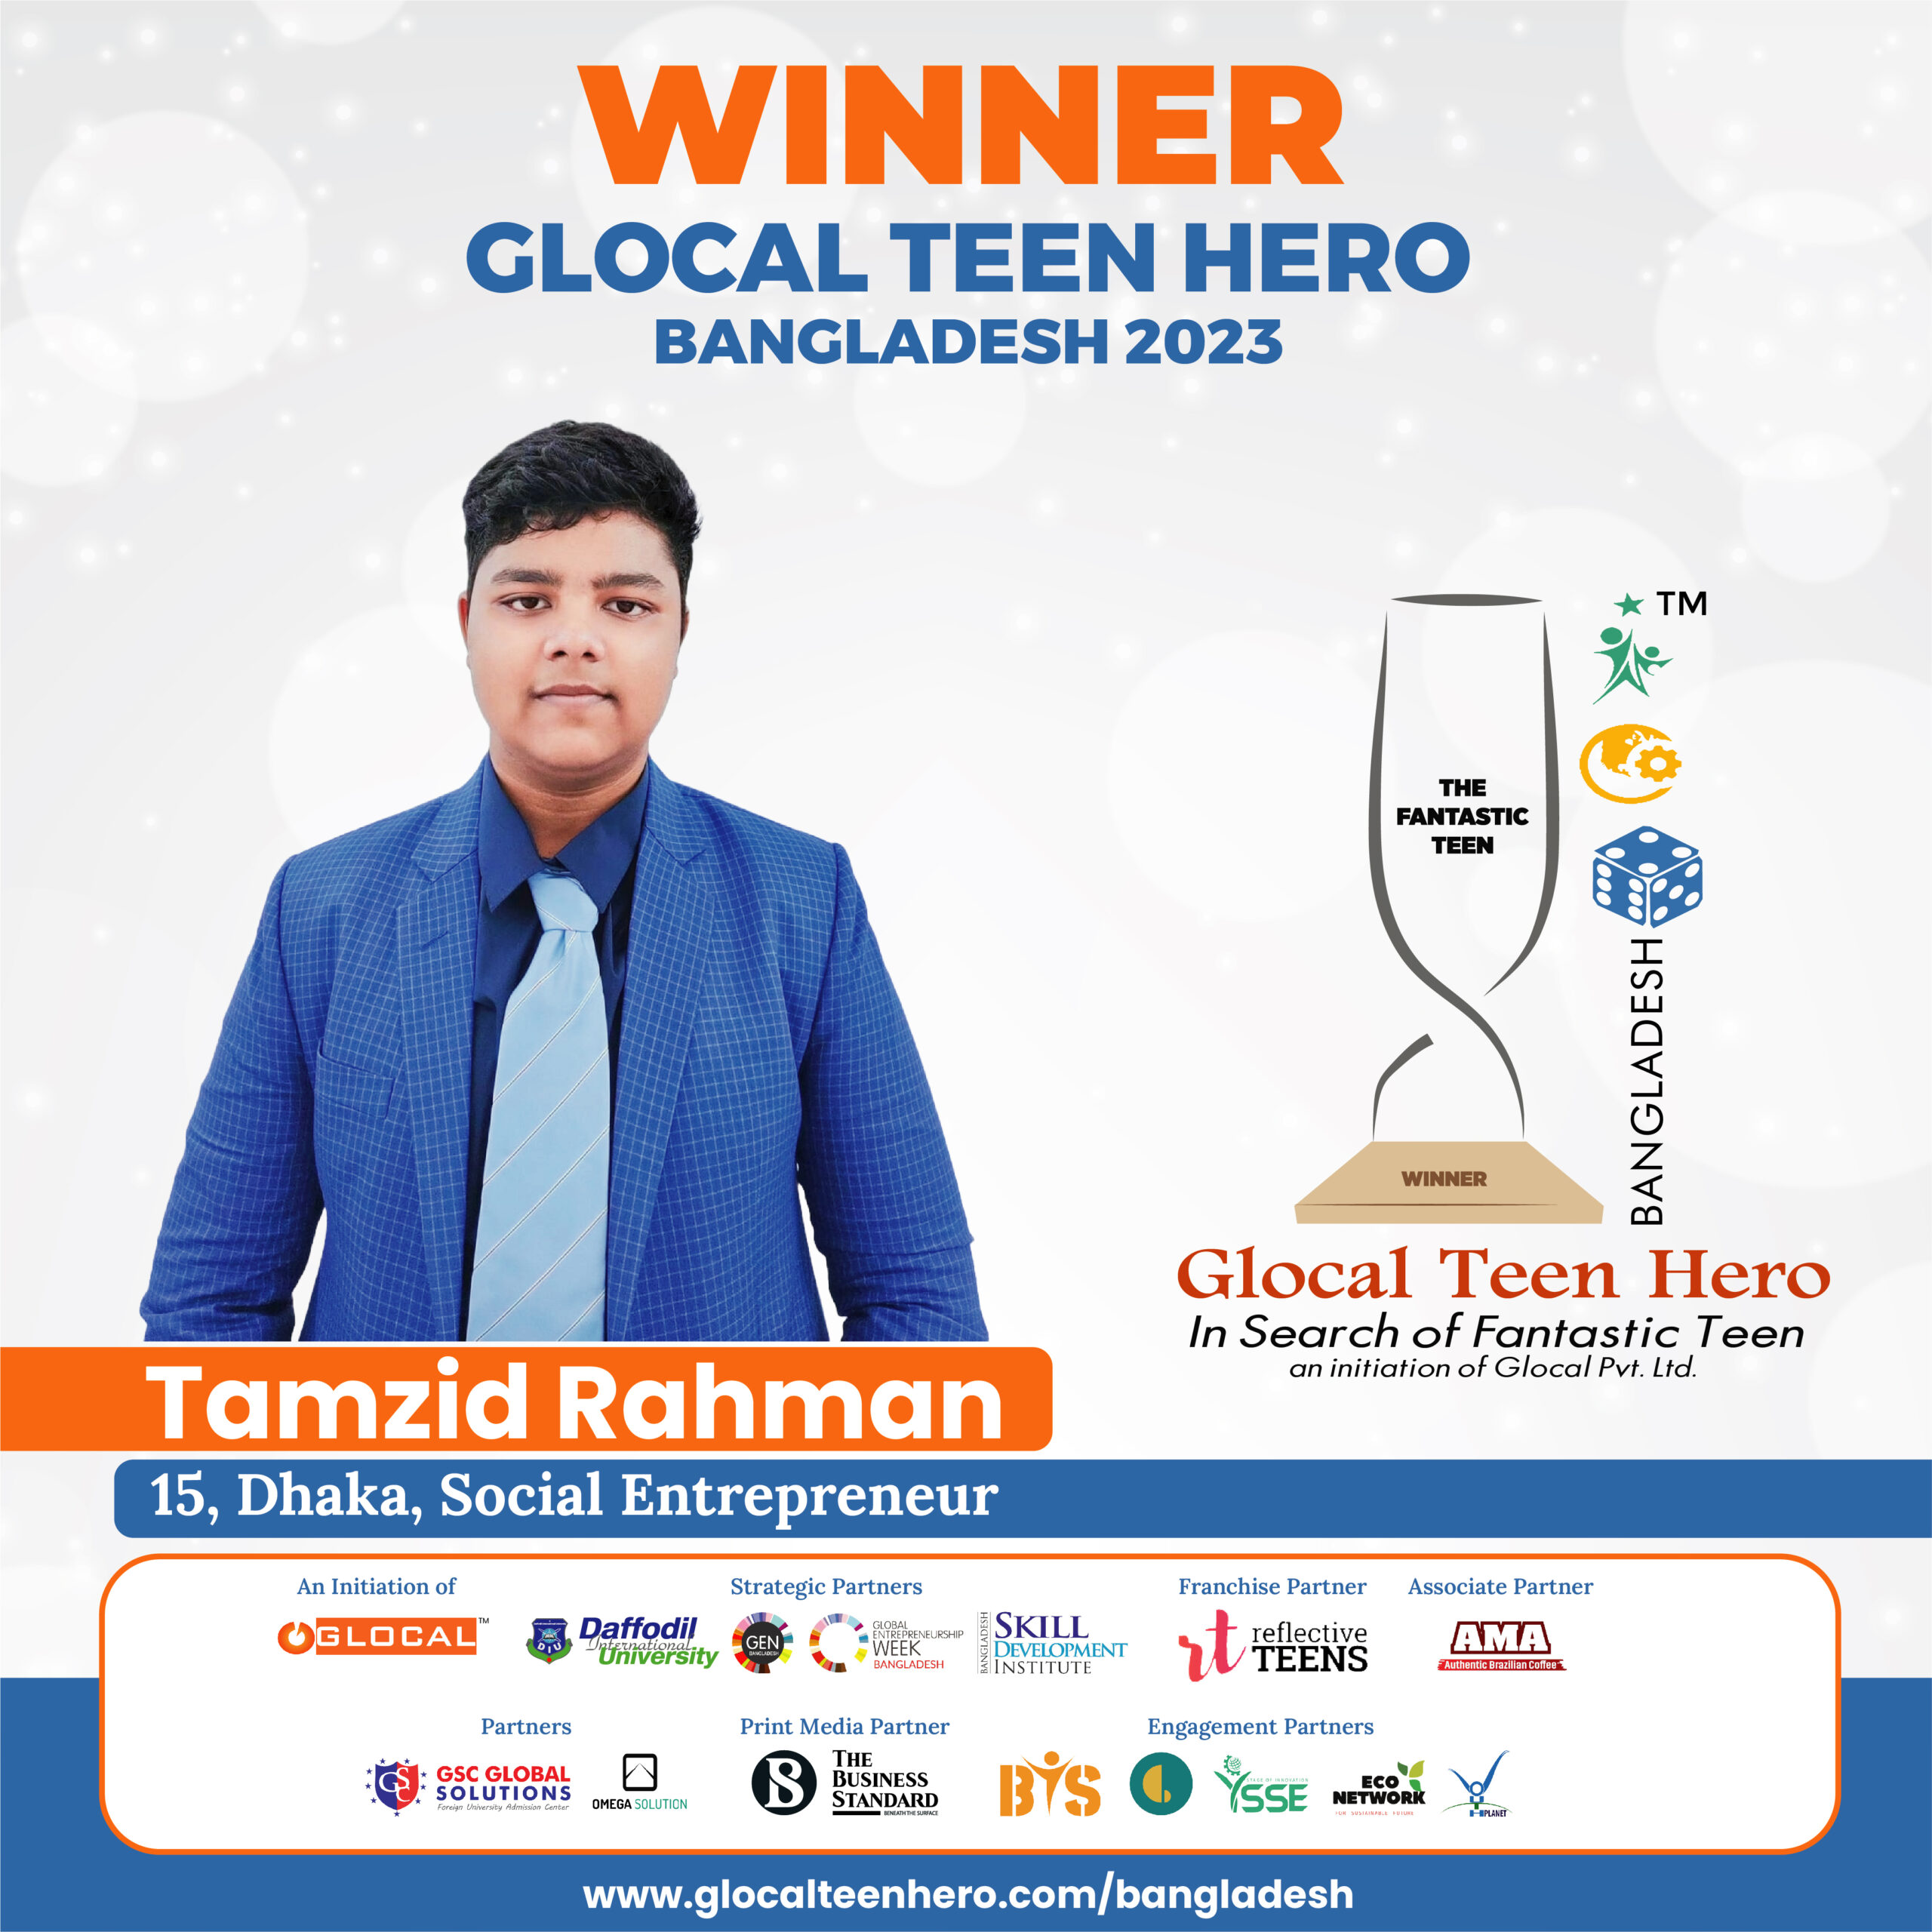 Mr. Tamzid Rahman 15-year-old Social Entrepreneur Felicitated as Glocal Teen Hero Bangladesh 2023